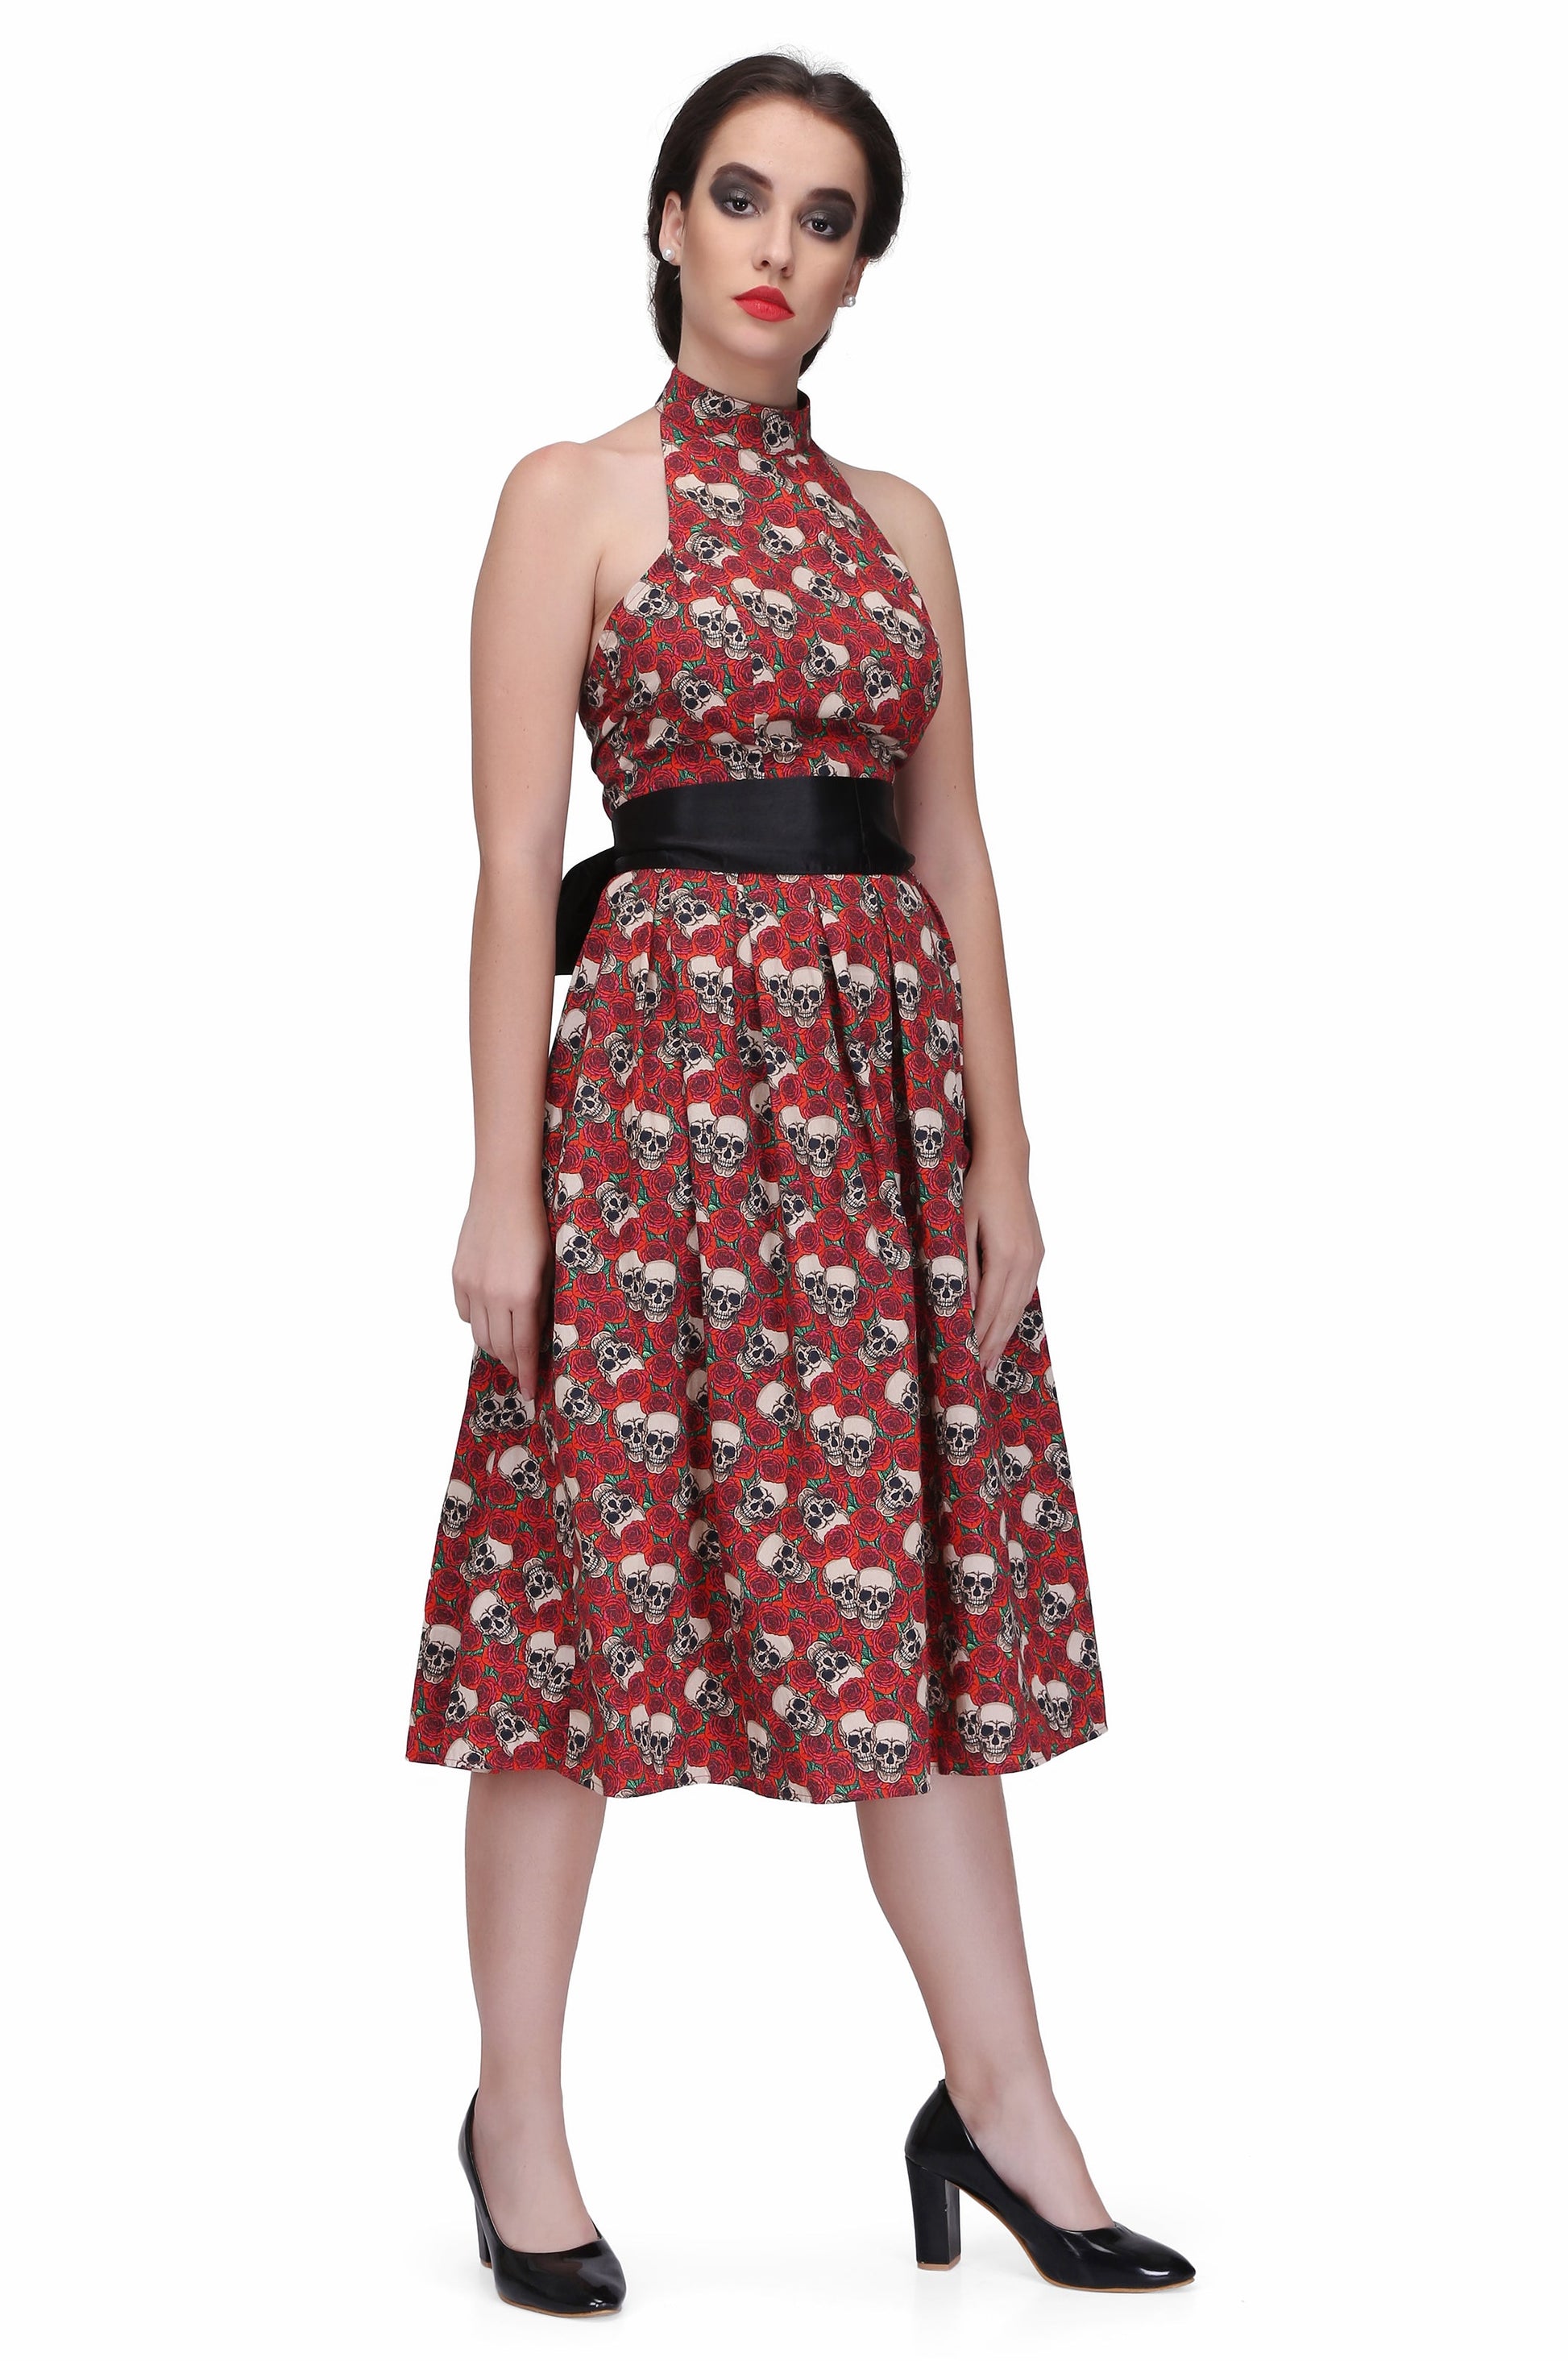 Red/Black printed gothic knee length dress - Corset Revolution